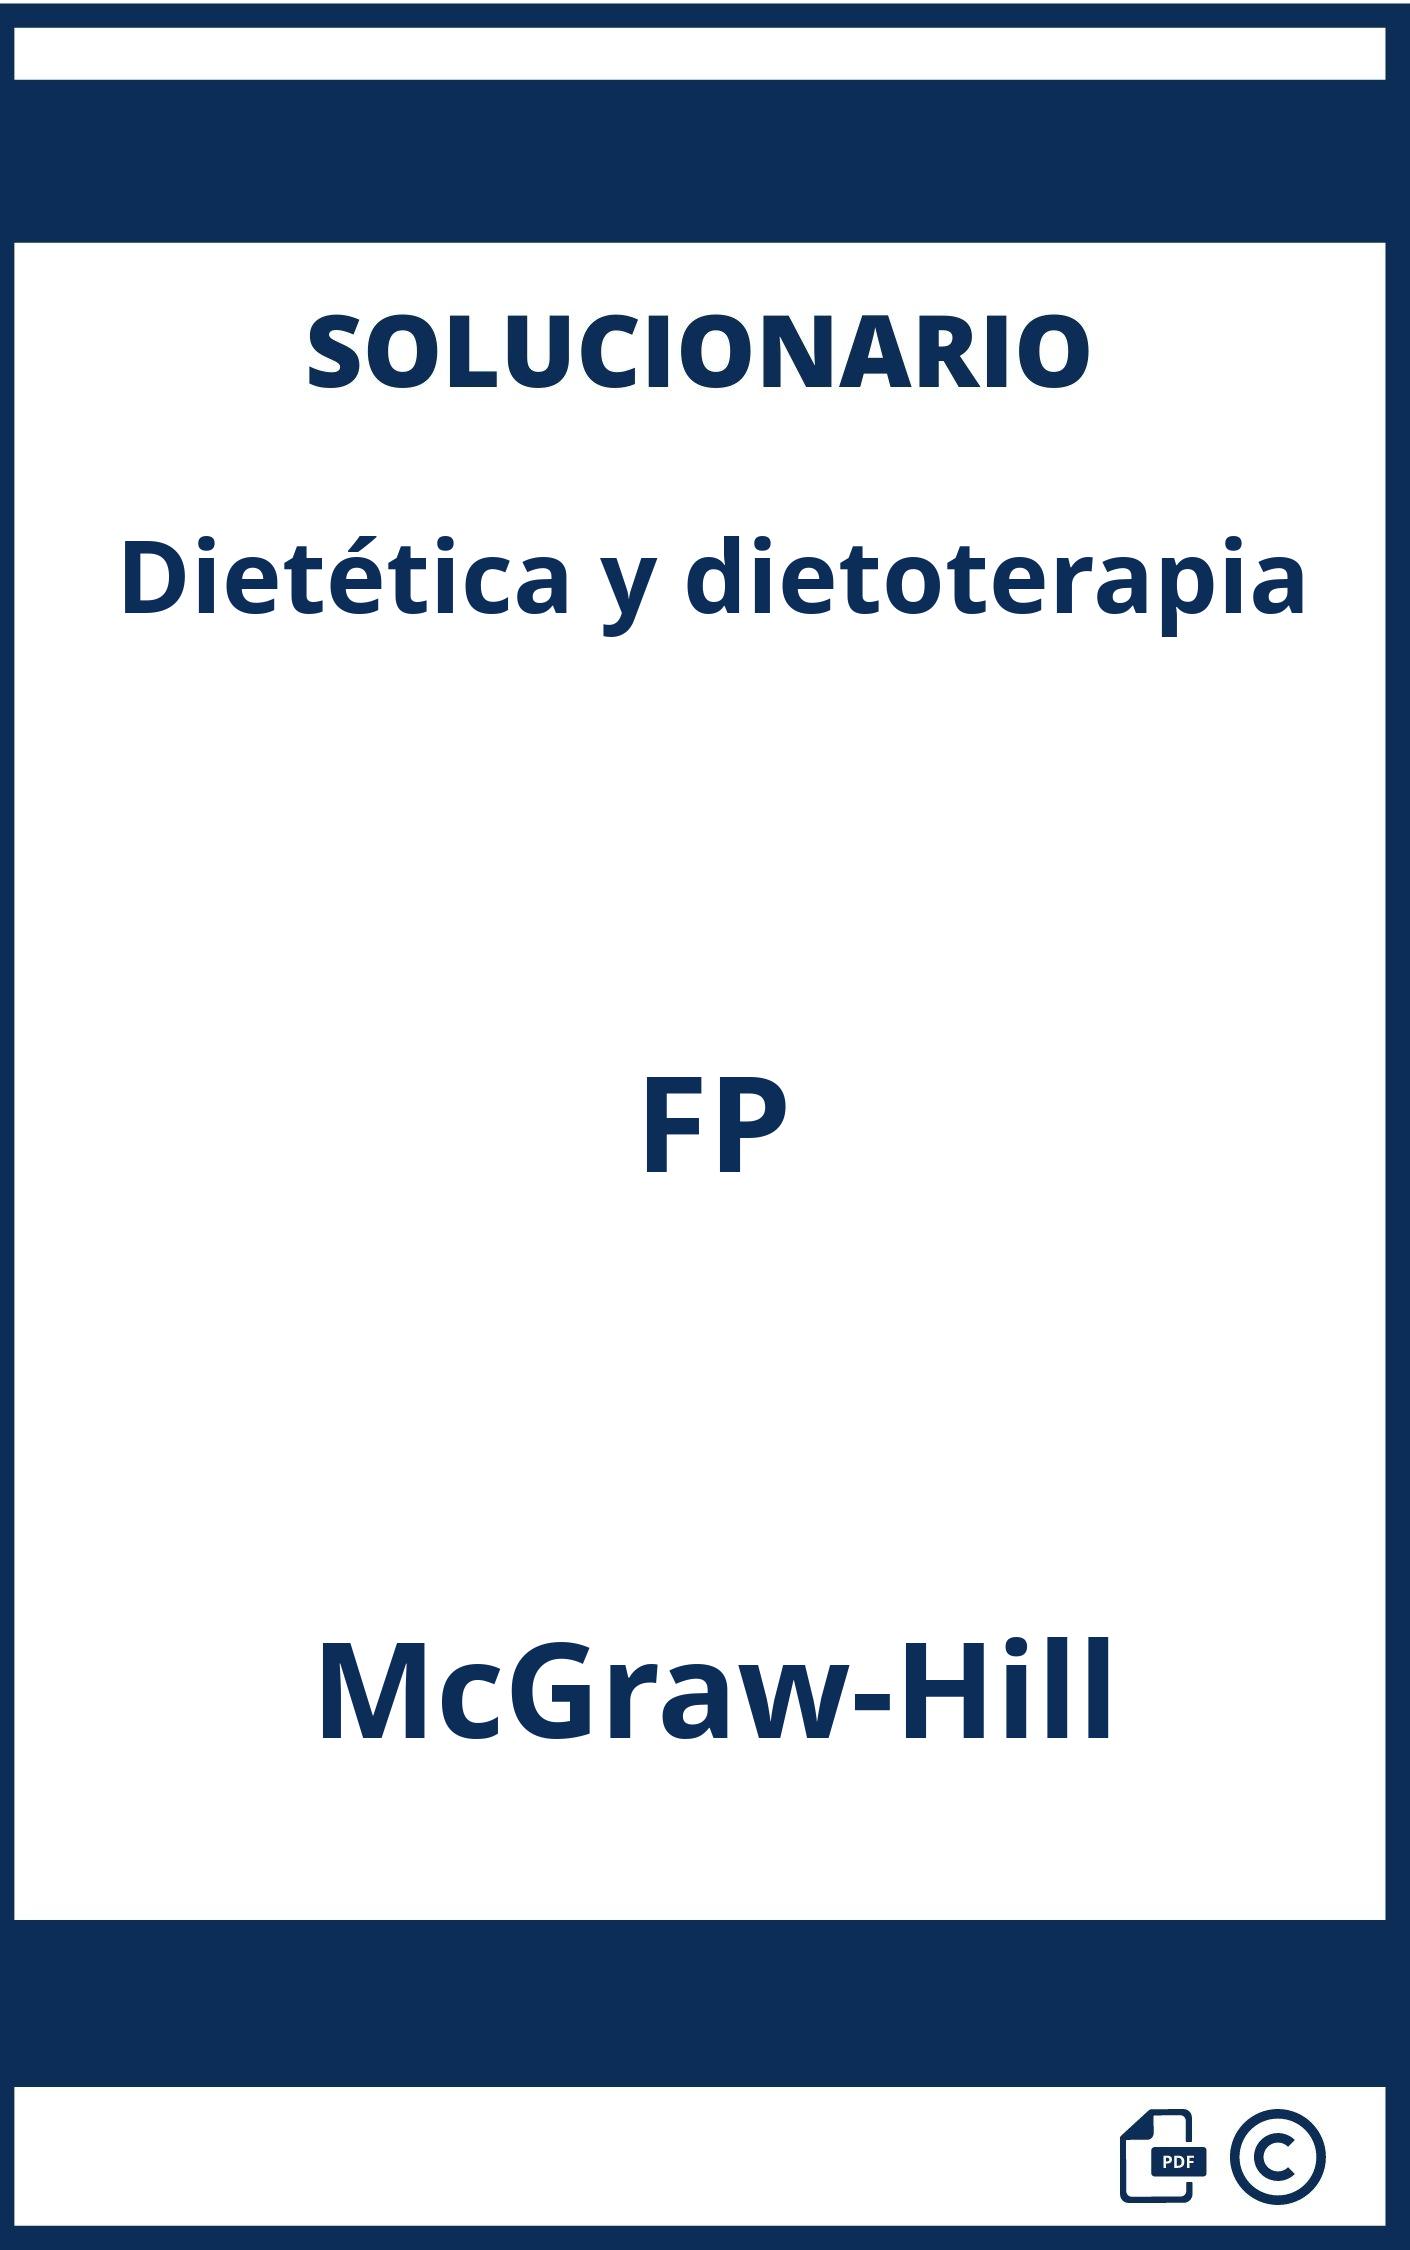 Solucionario Dietética y dietoterapia FP McGraw-Hill